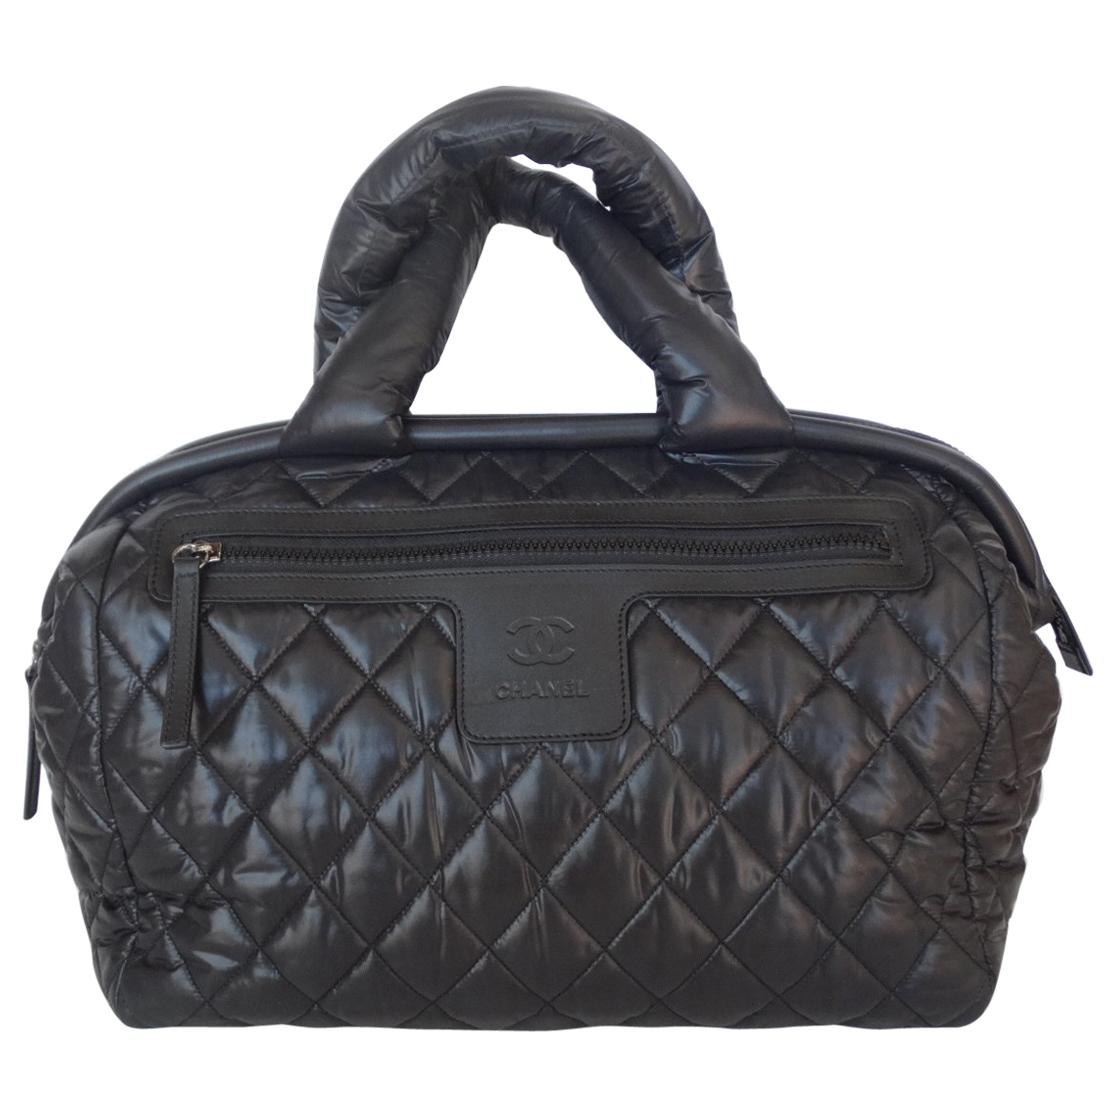 2009 Chanel Coco Cocoon Tote Bag